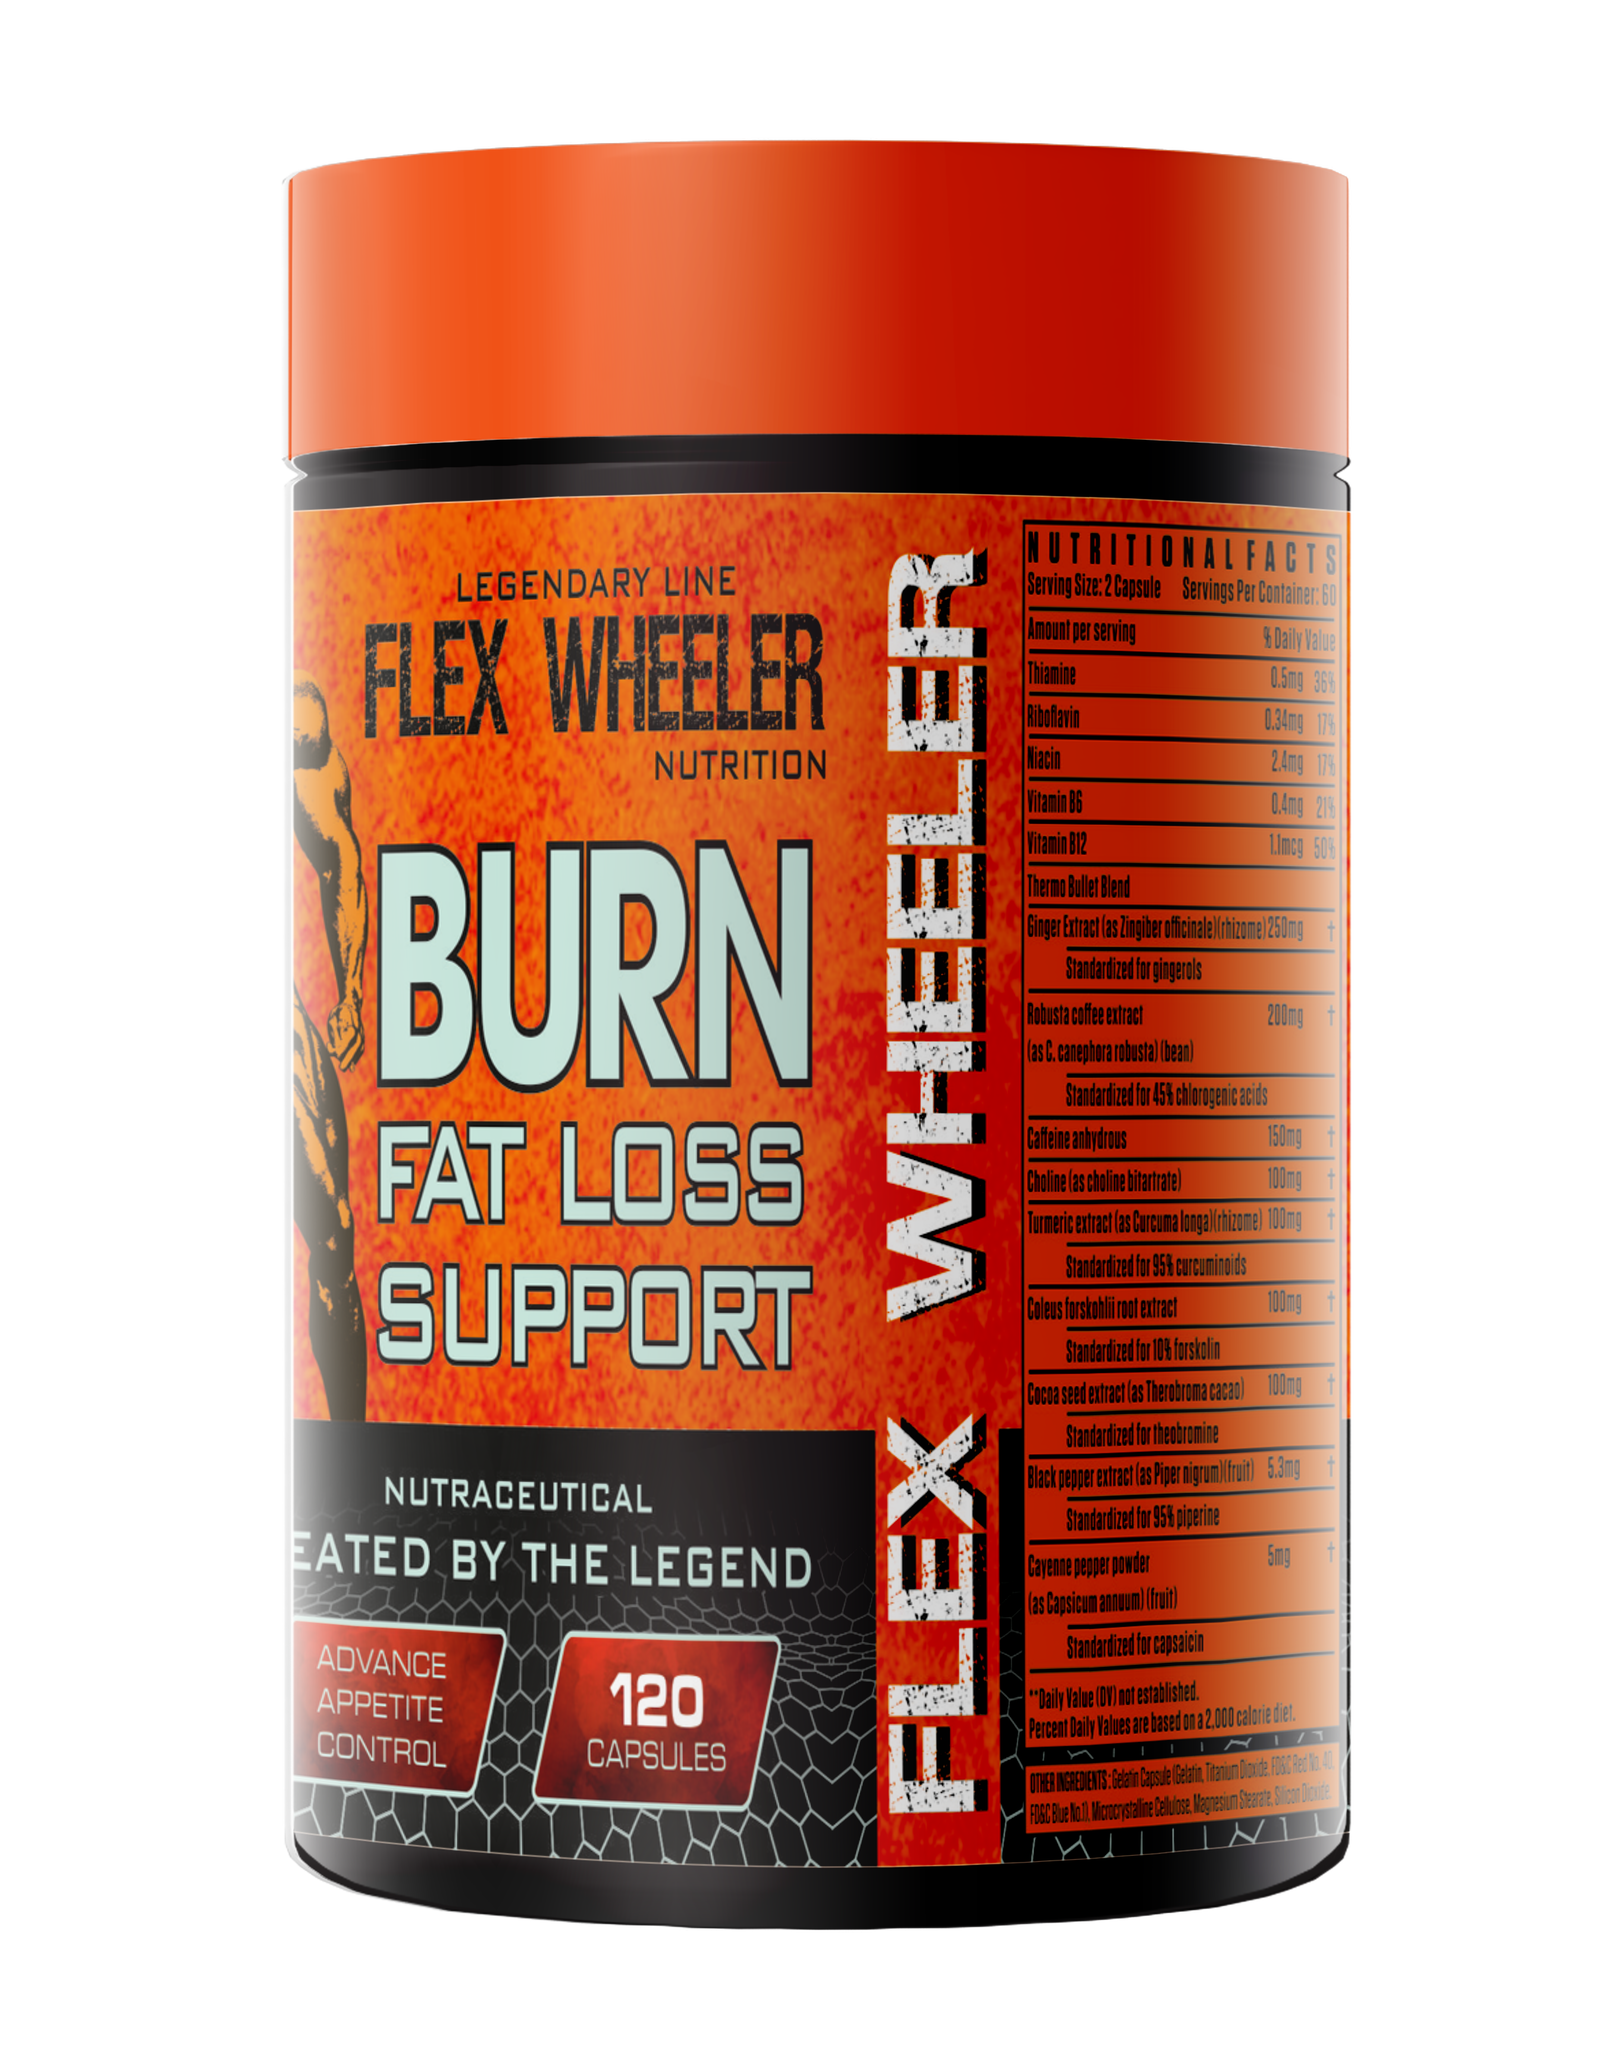 FEN Fat Burner 120 kaps. - Fat burners - Supplement brand FEN sport  nutrition e-shop